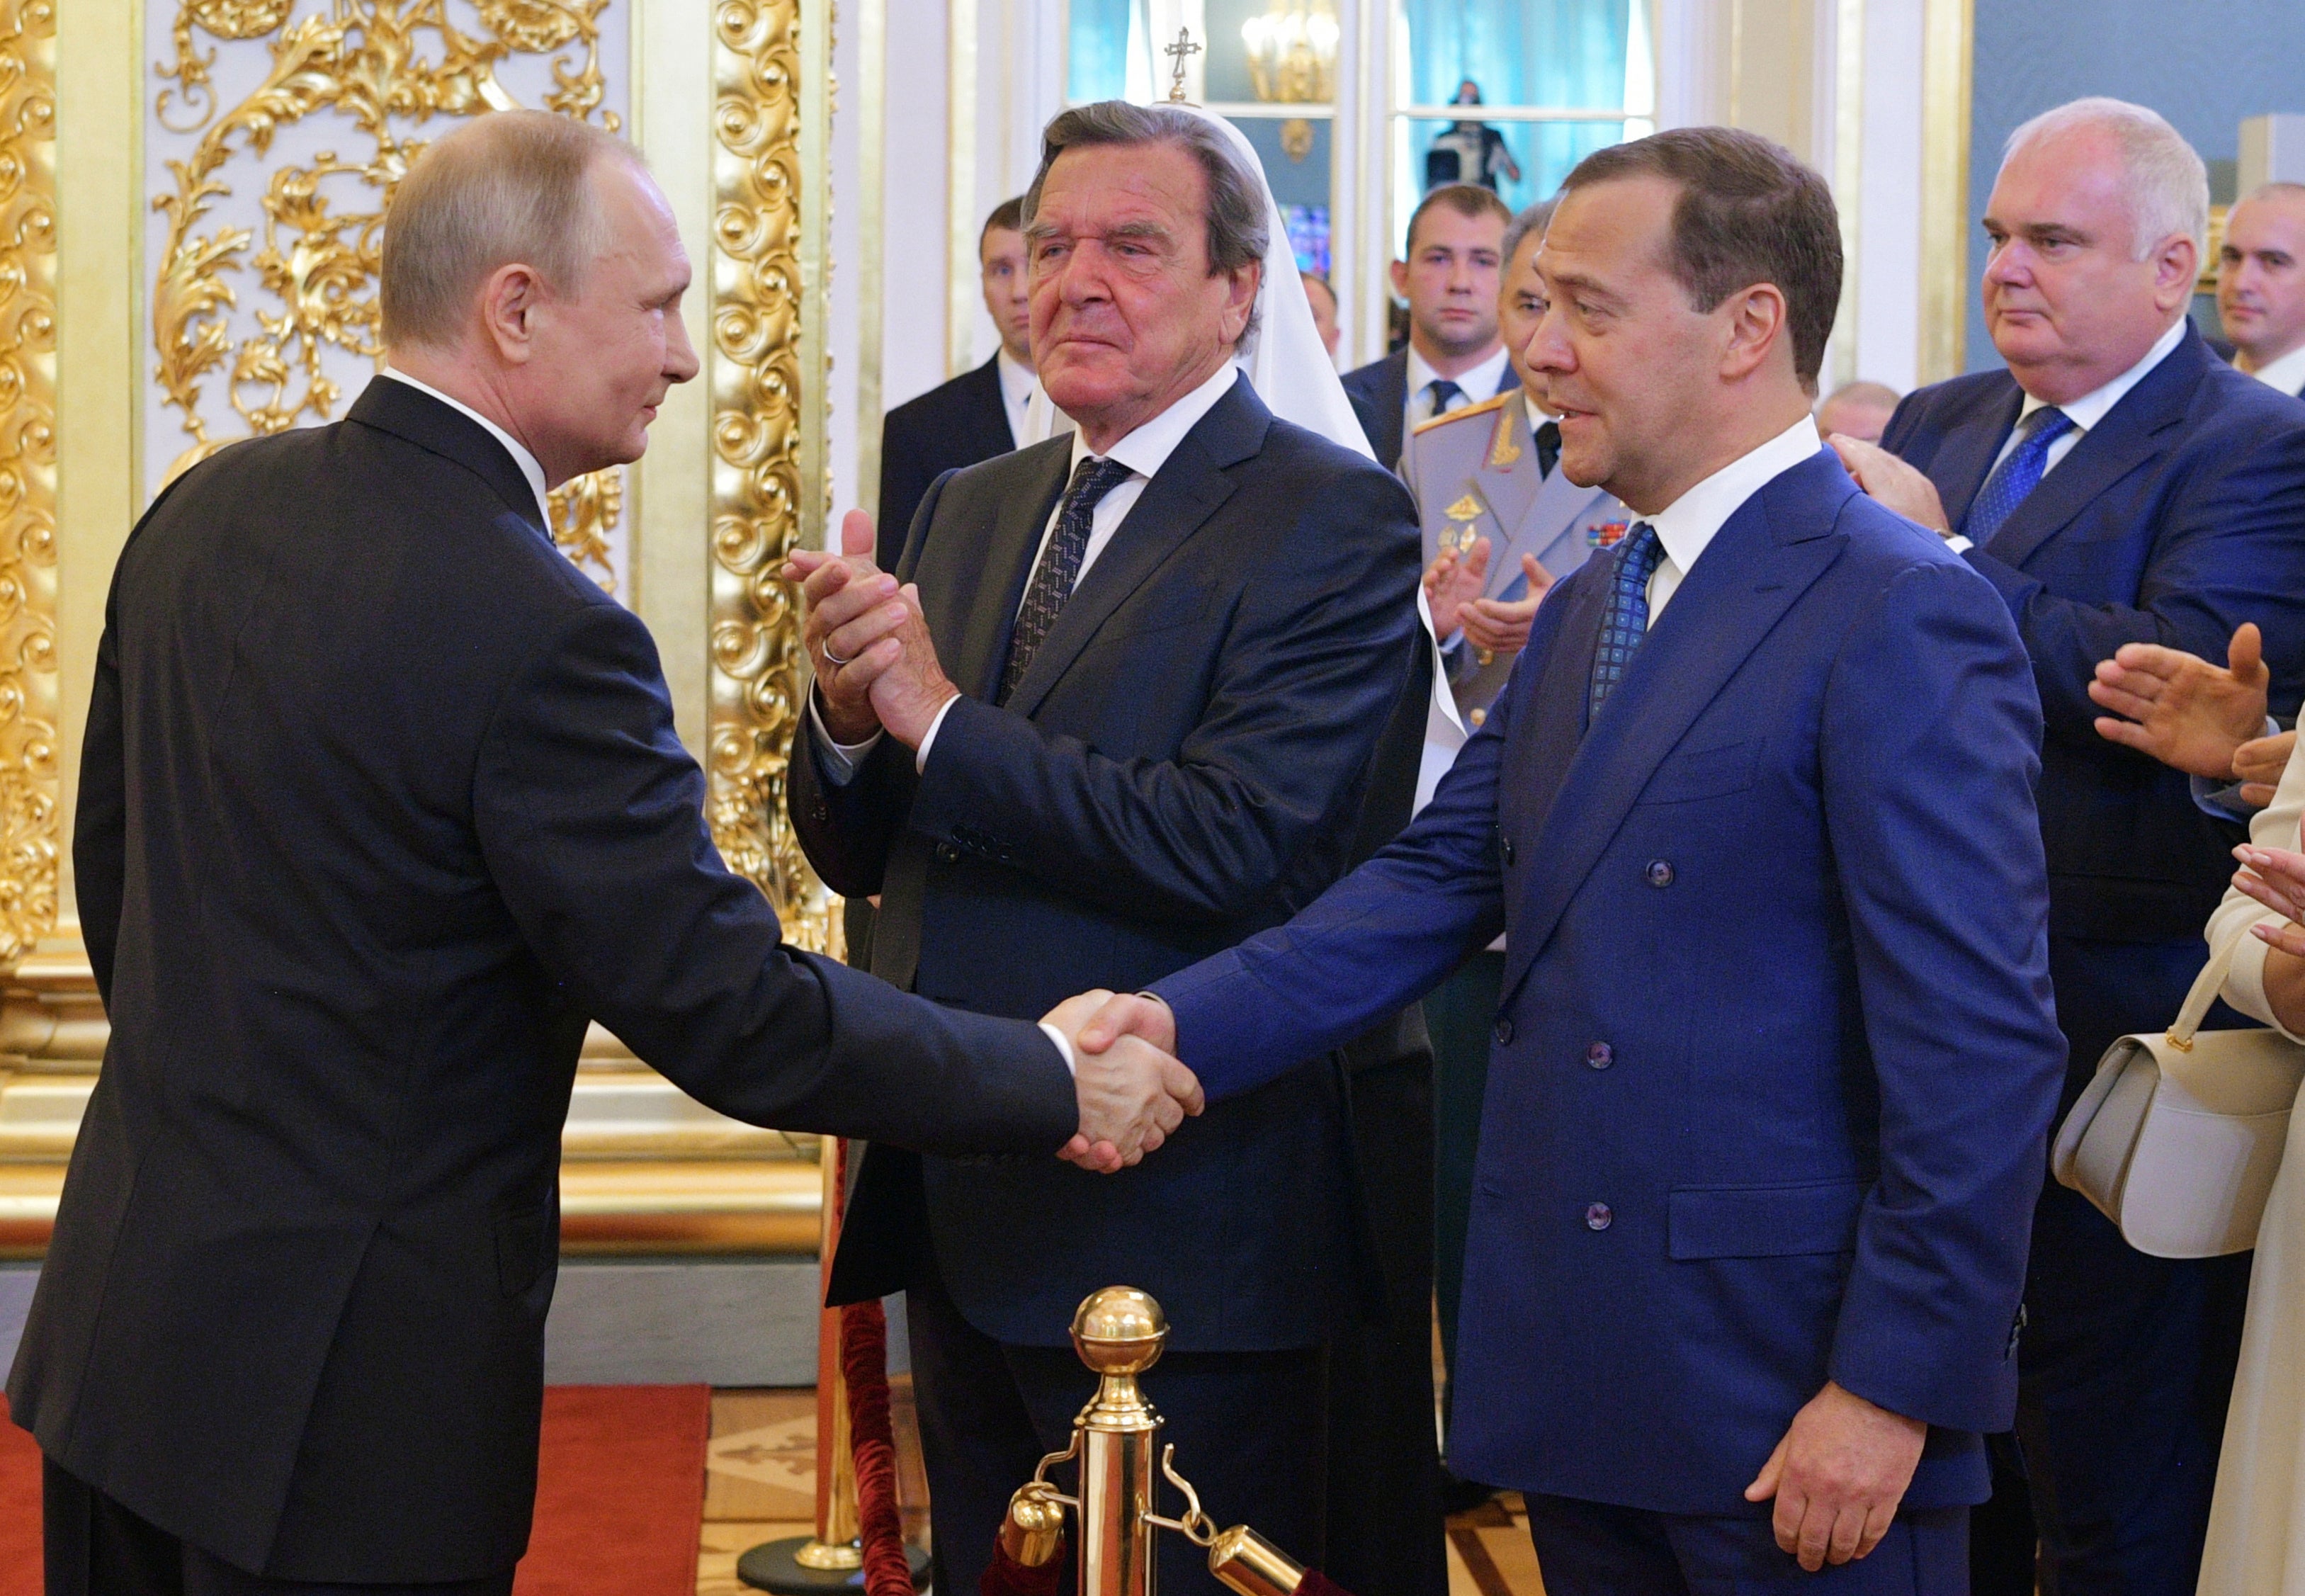 Vladimir Putin [L] shakes the hand of his predecessor Dmitry Medvedev